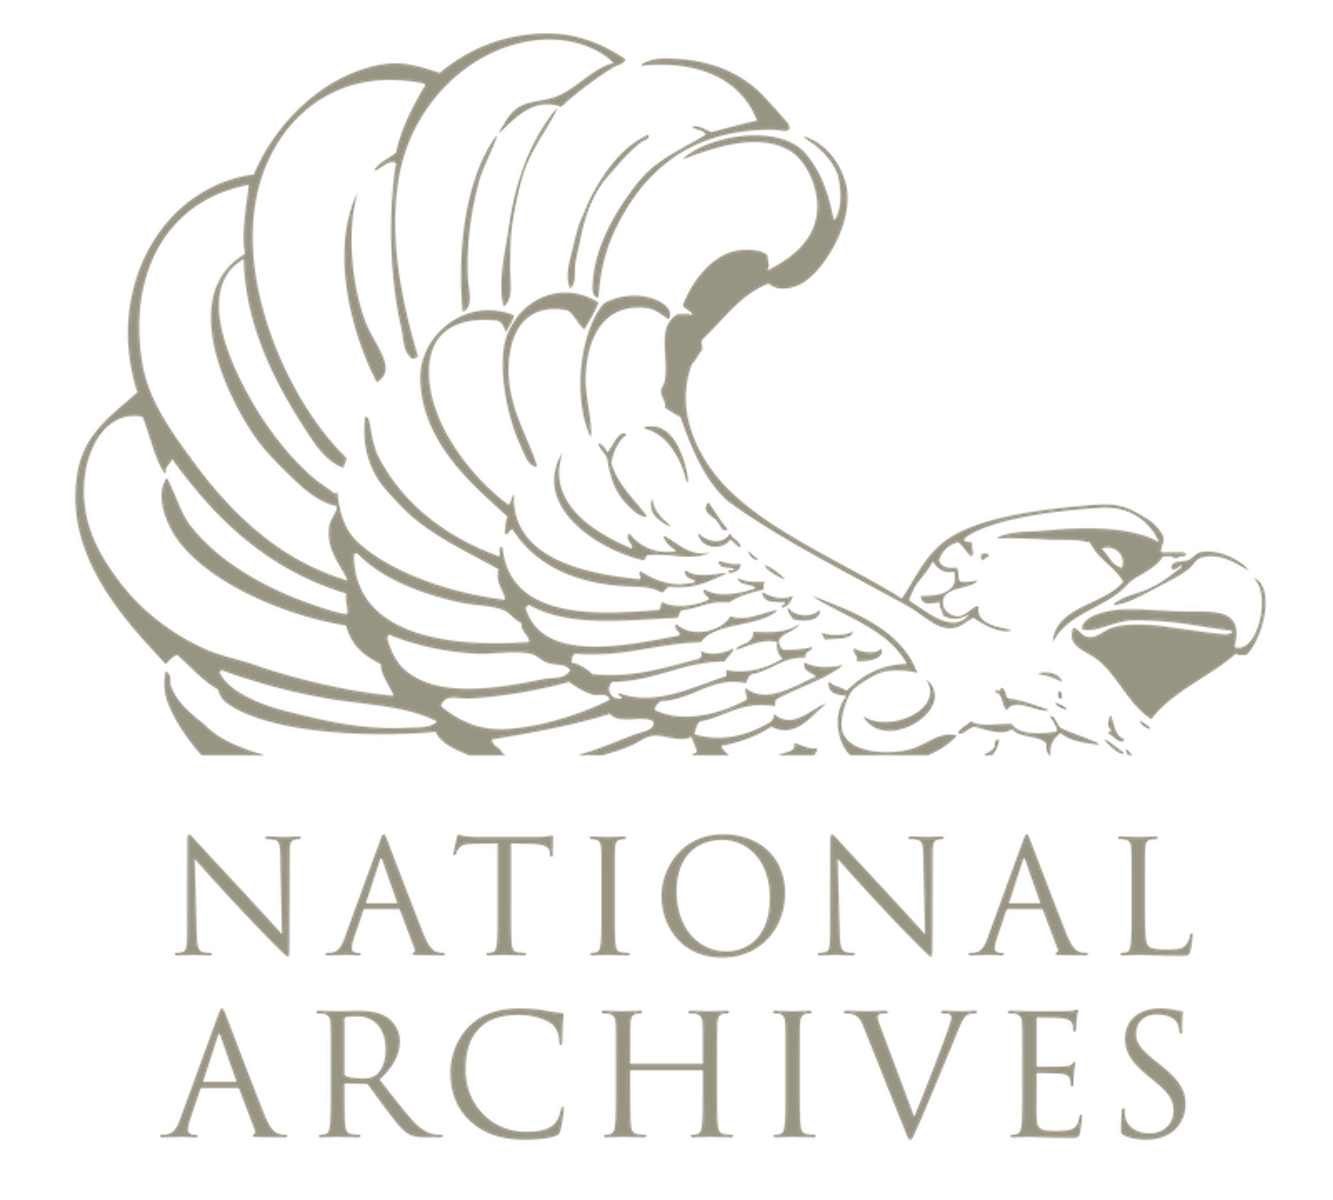 U.S. National Archives logo